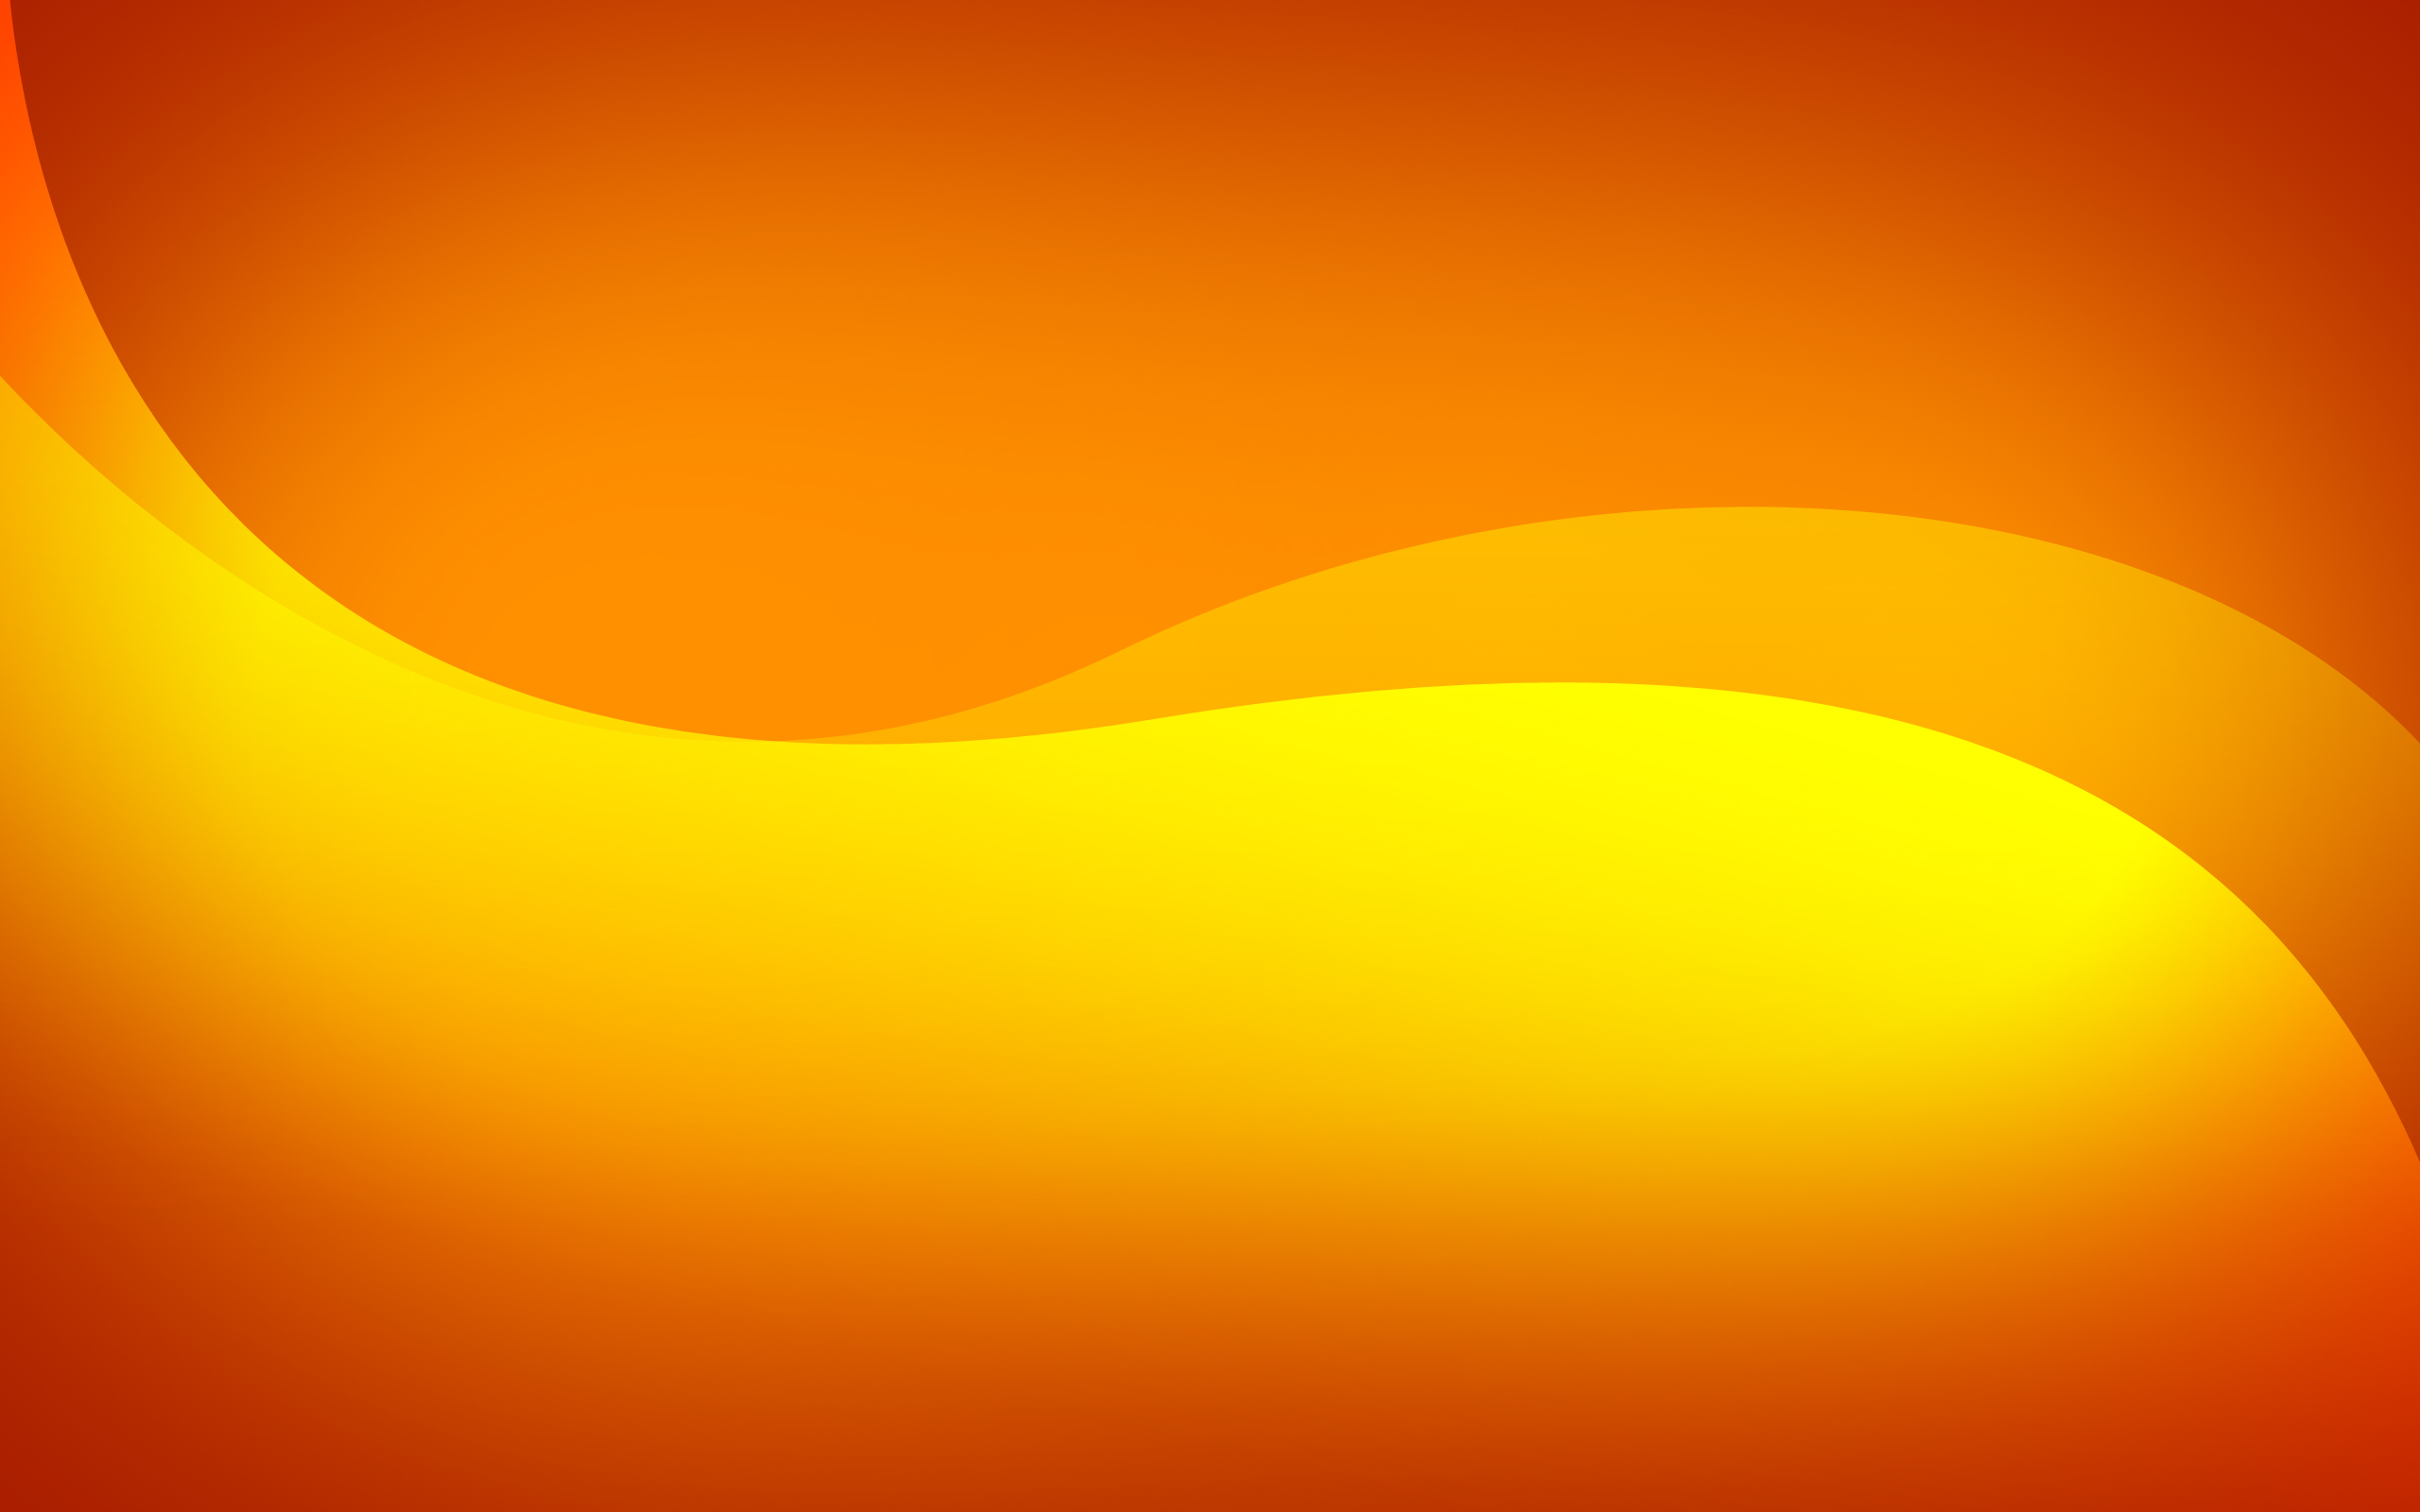 Orange HD Wallpaper Background Image 2560x1600 ID117330